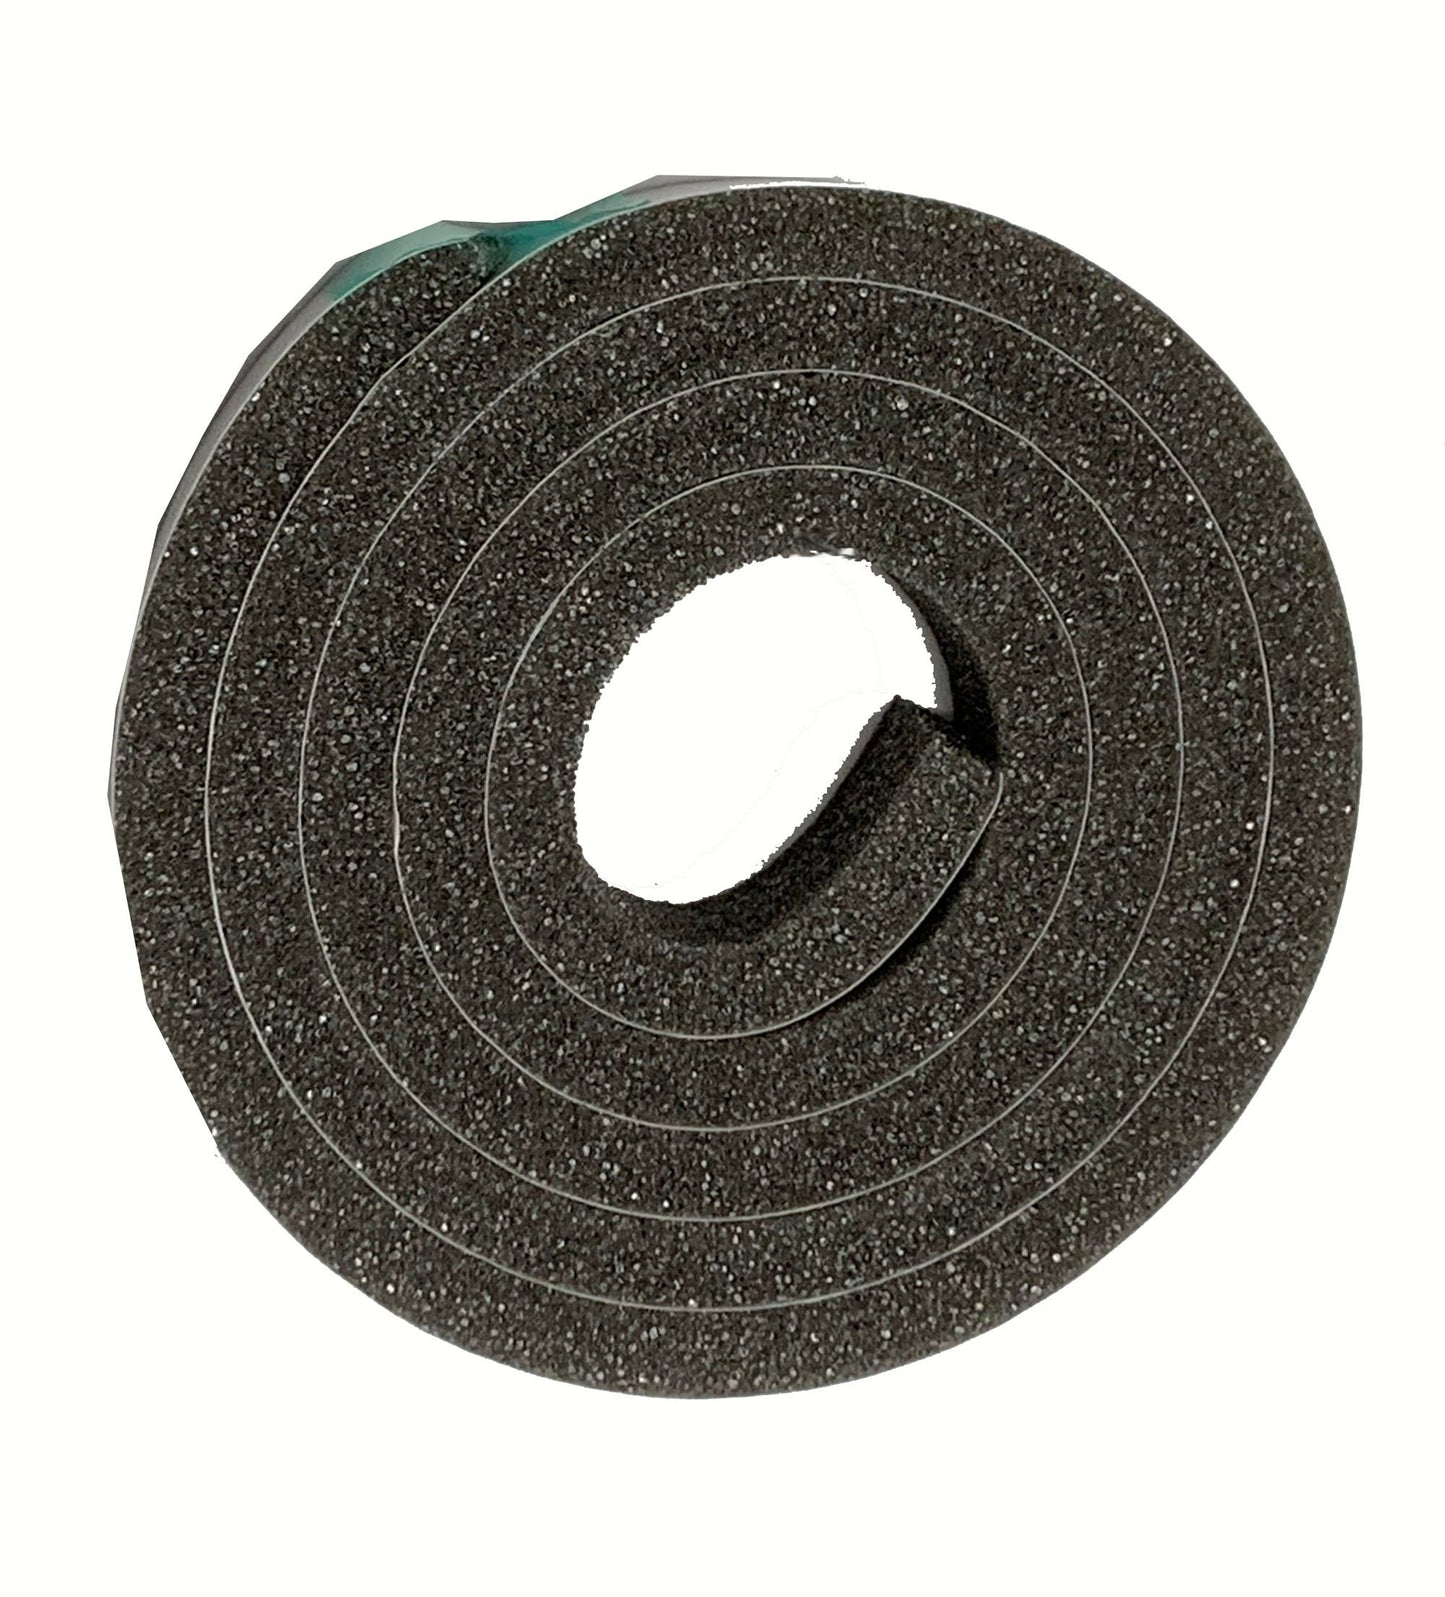 hat sizing reducing foam tape roll